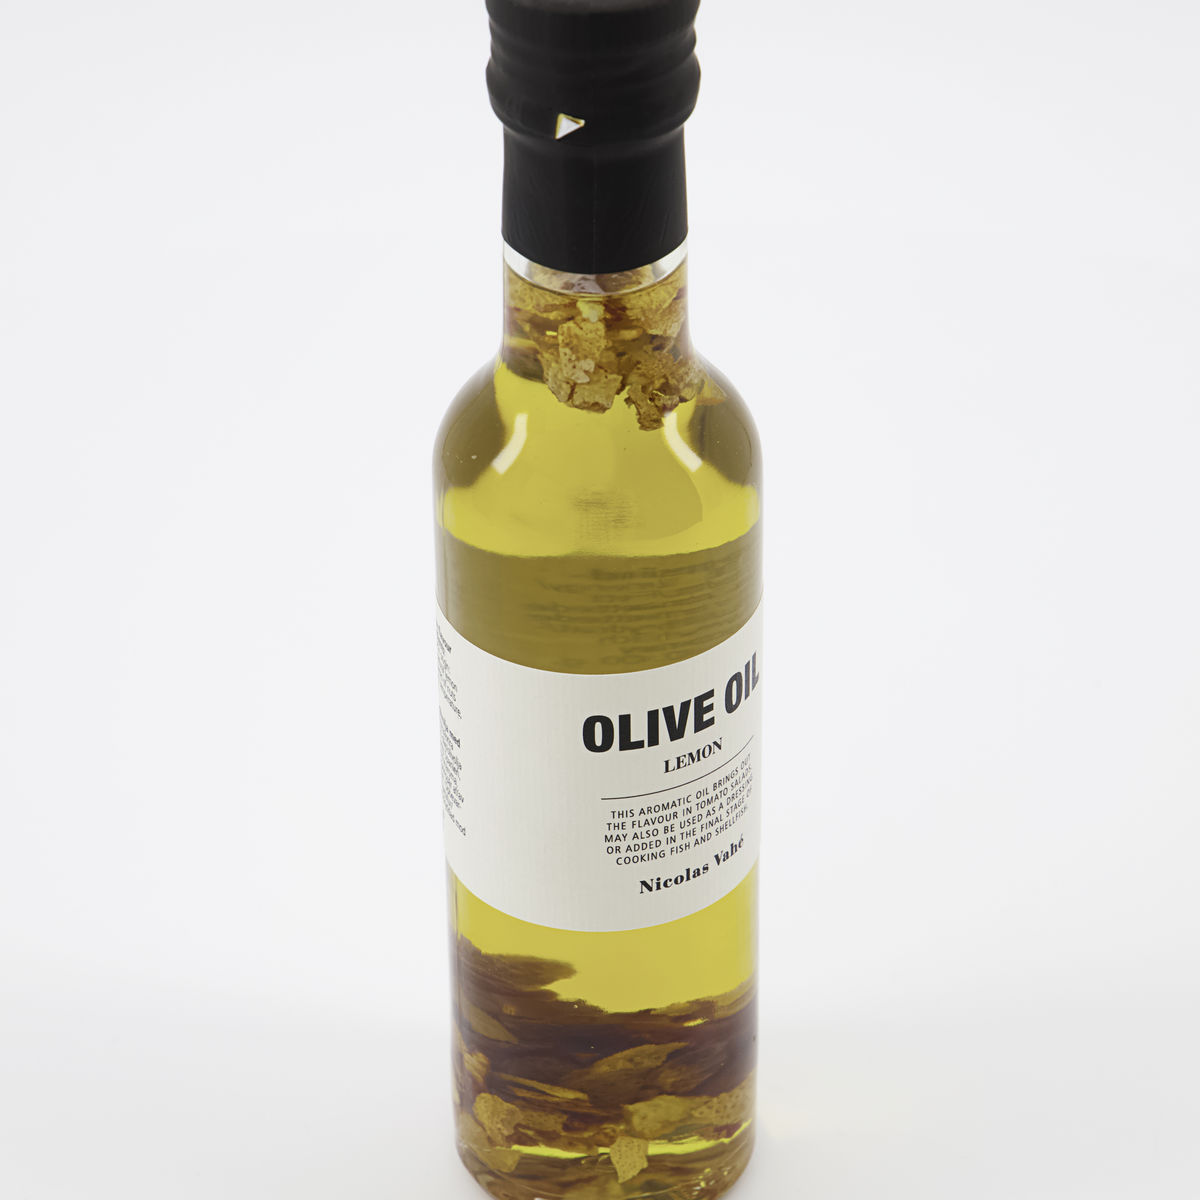 Natives Olivenöl extra, Zitrone von Nicolas Vahe